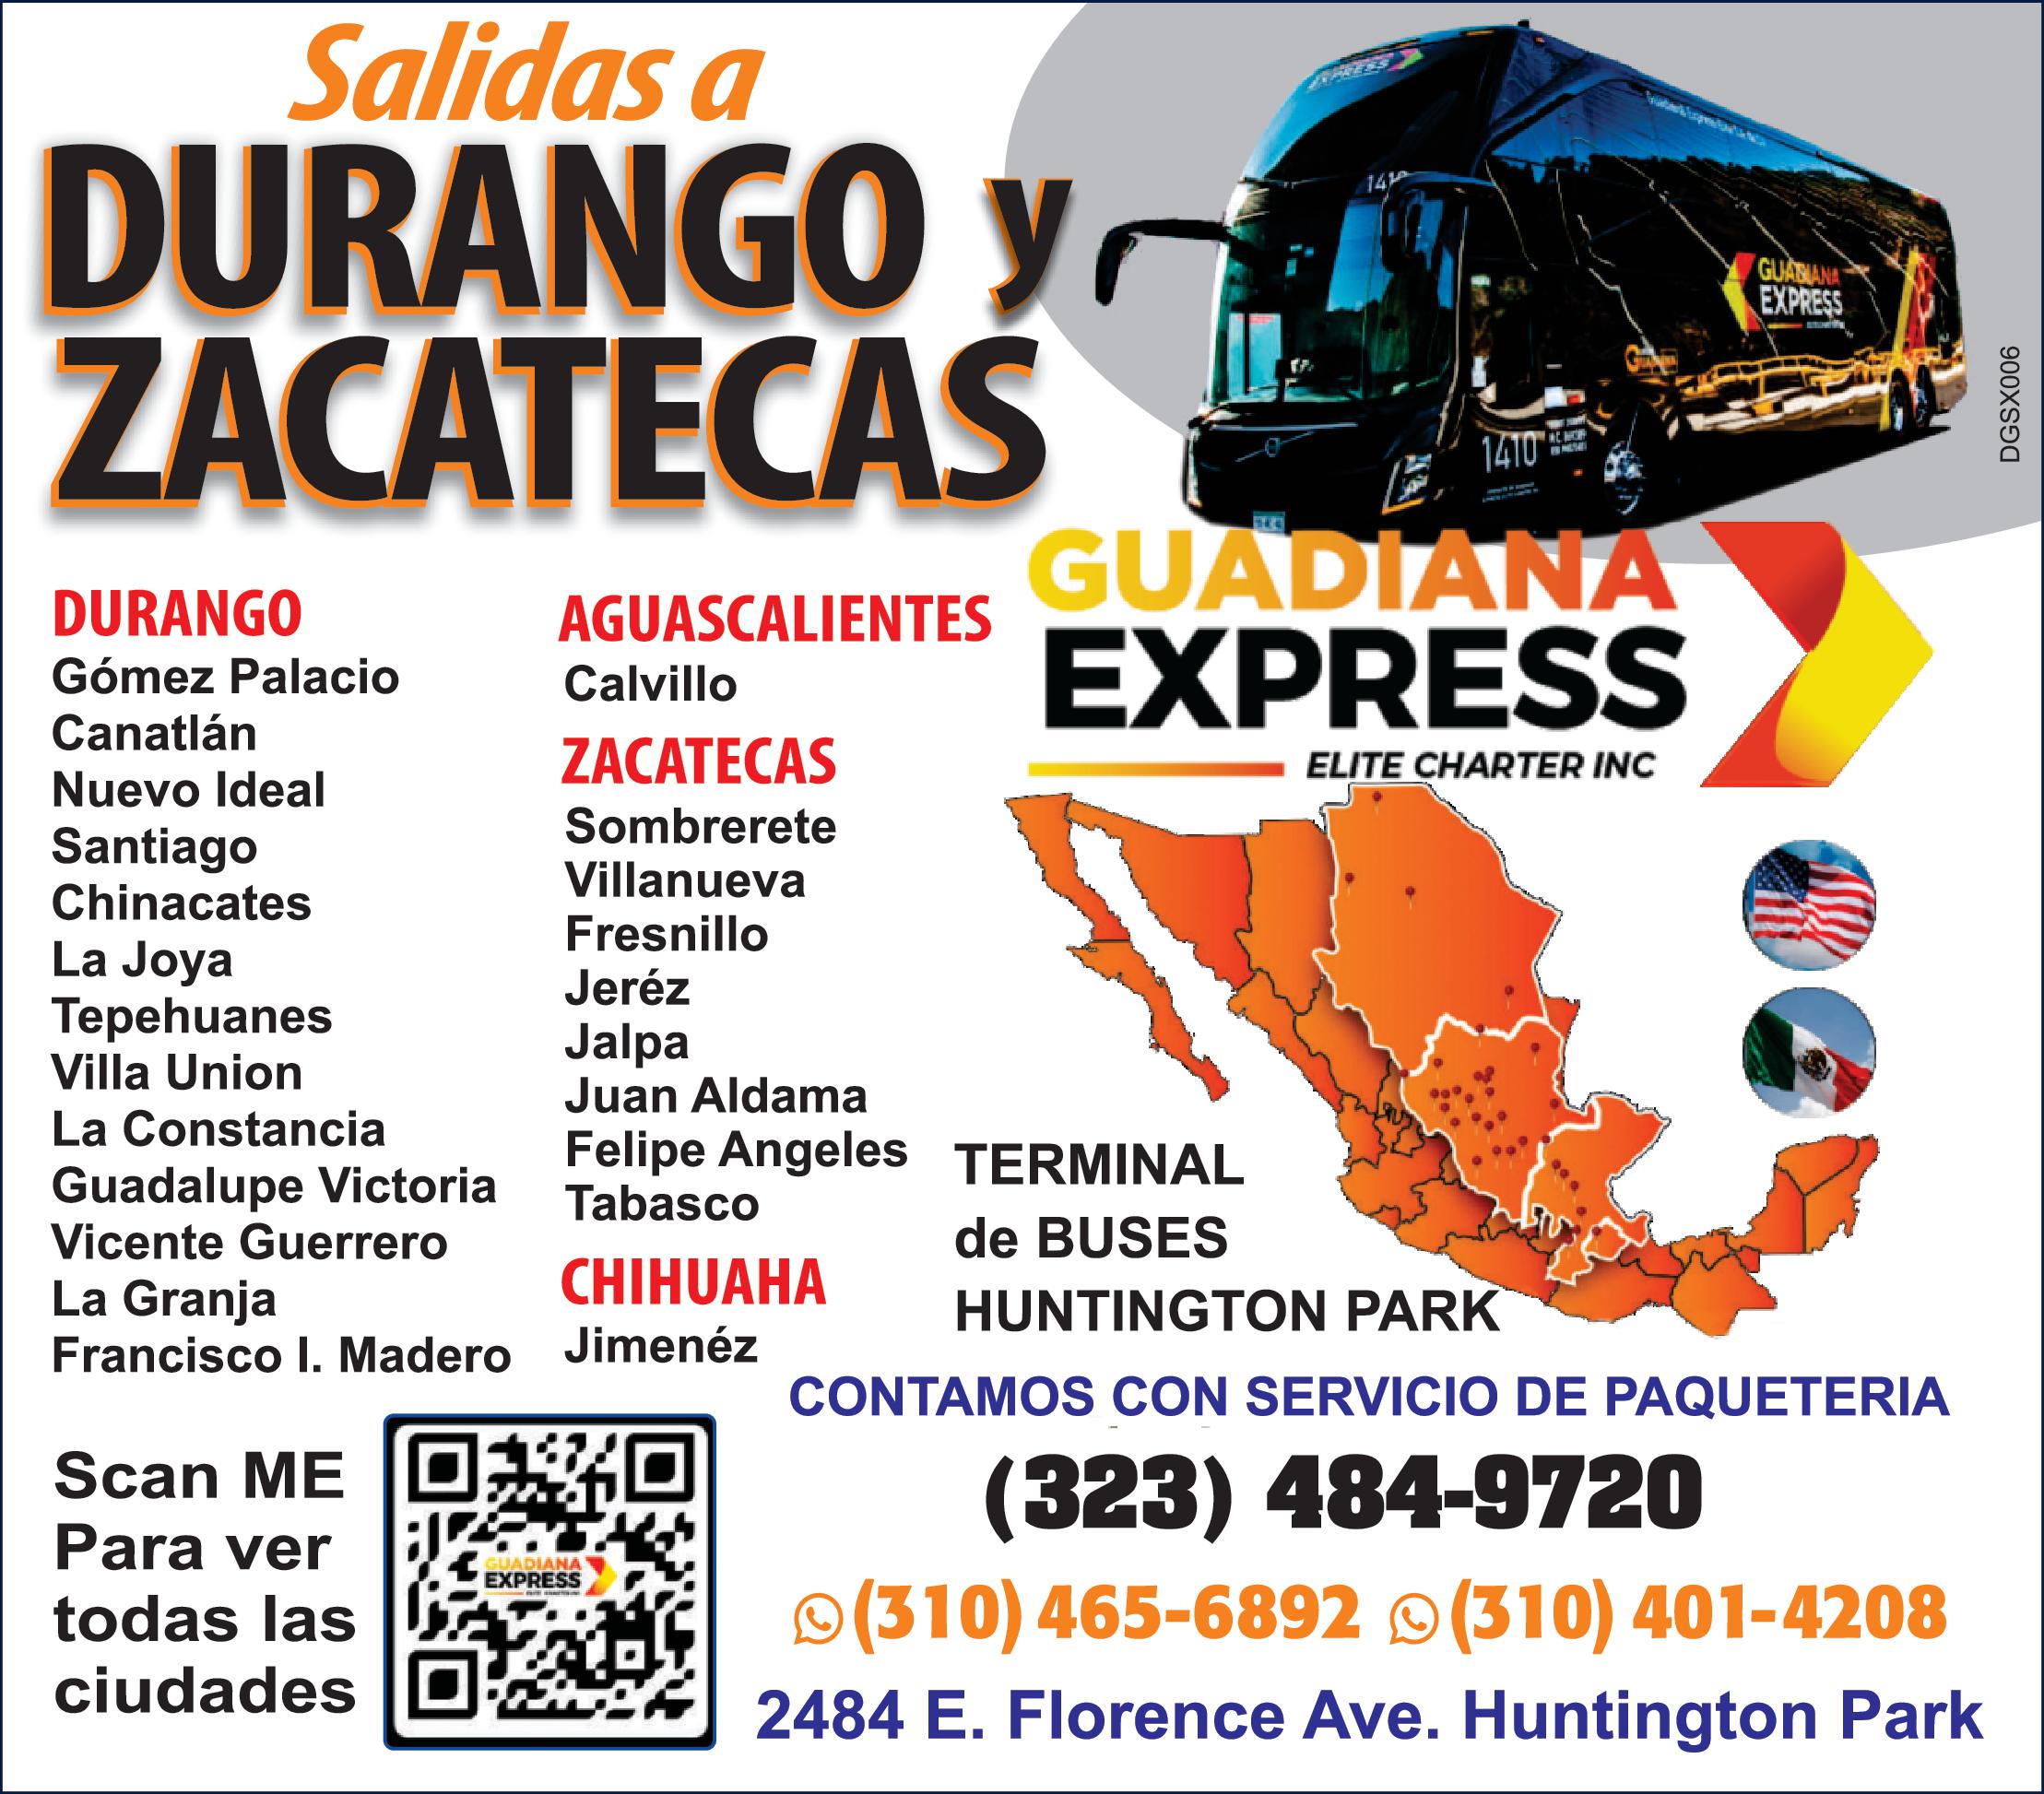 Guadiana Express